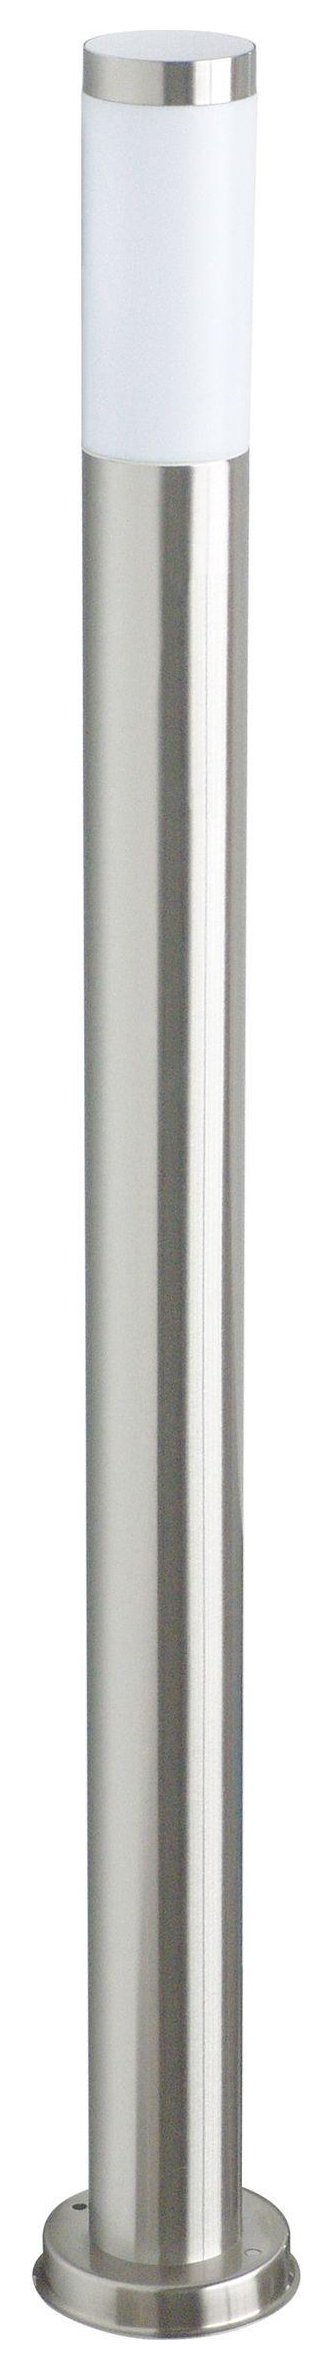 Ranex Large Silver Coloured Garden Lamp Post